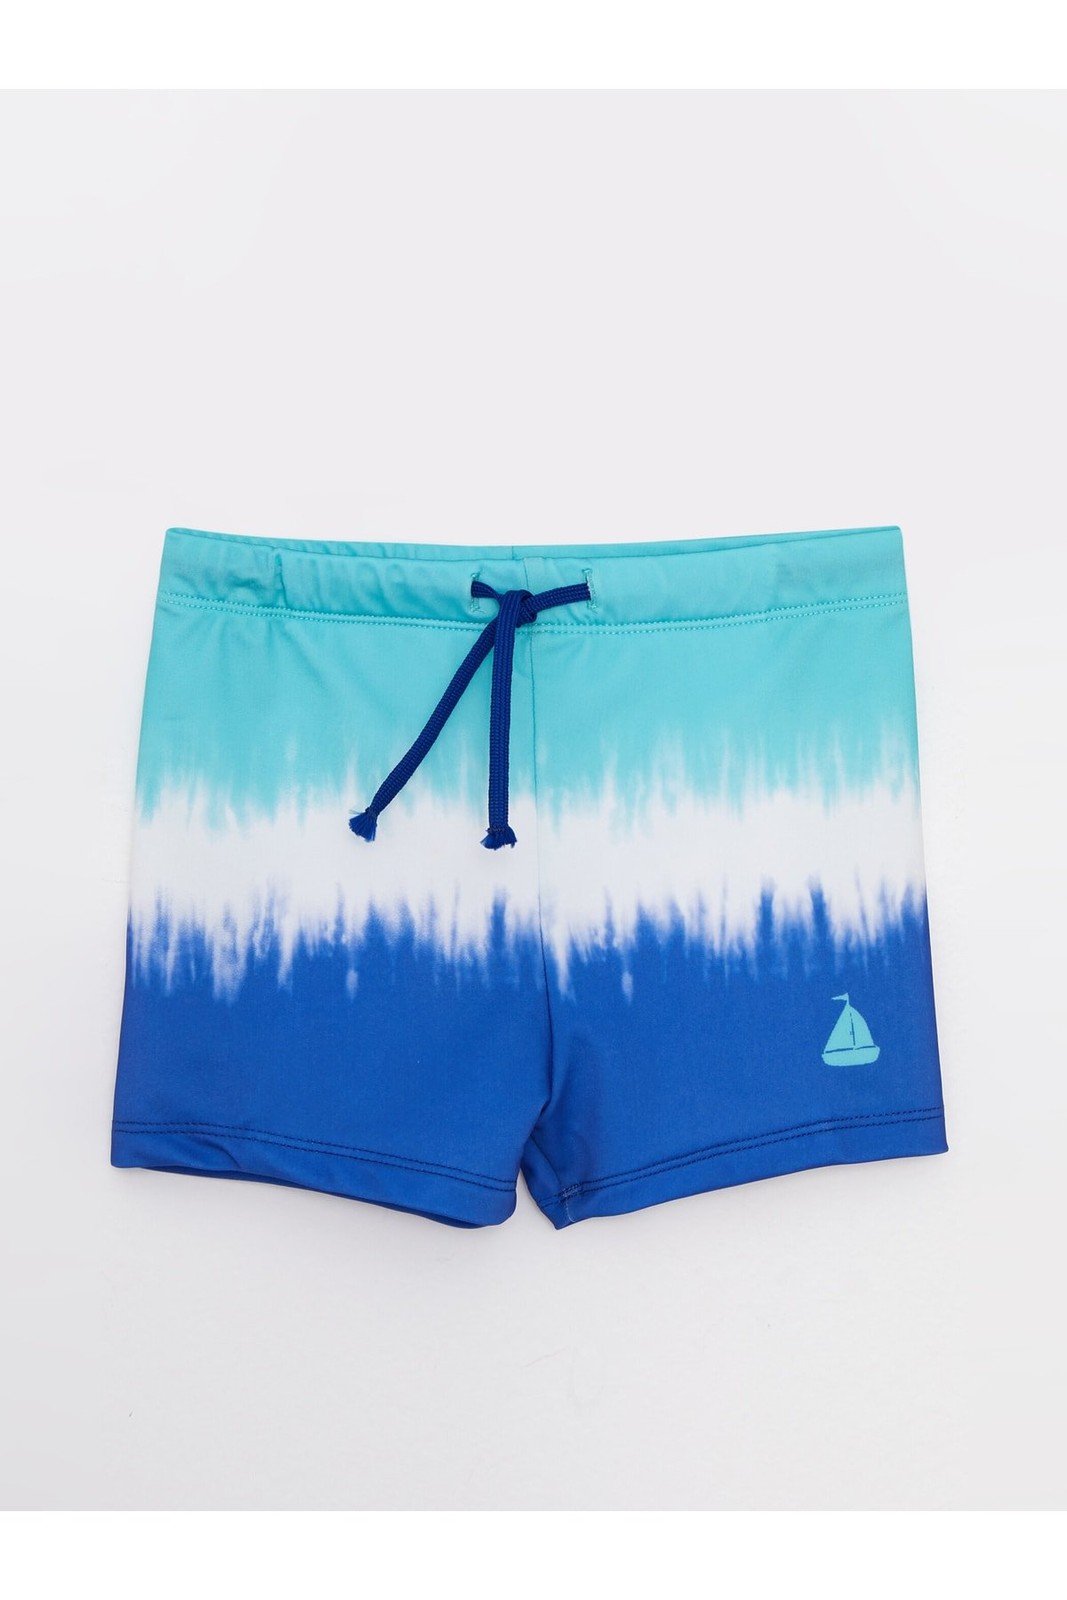 LC Waikiki Baby Boy Beach Shorts Made of Flexible Fabric with an Elastic Waist.